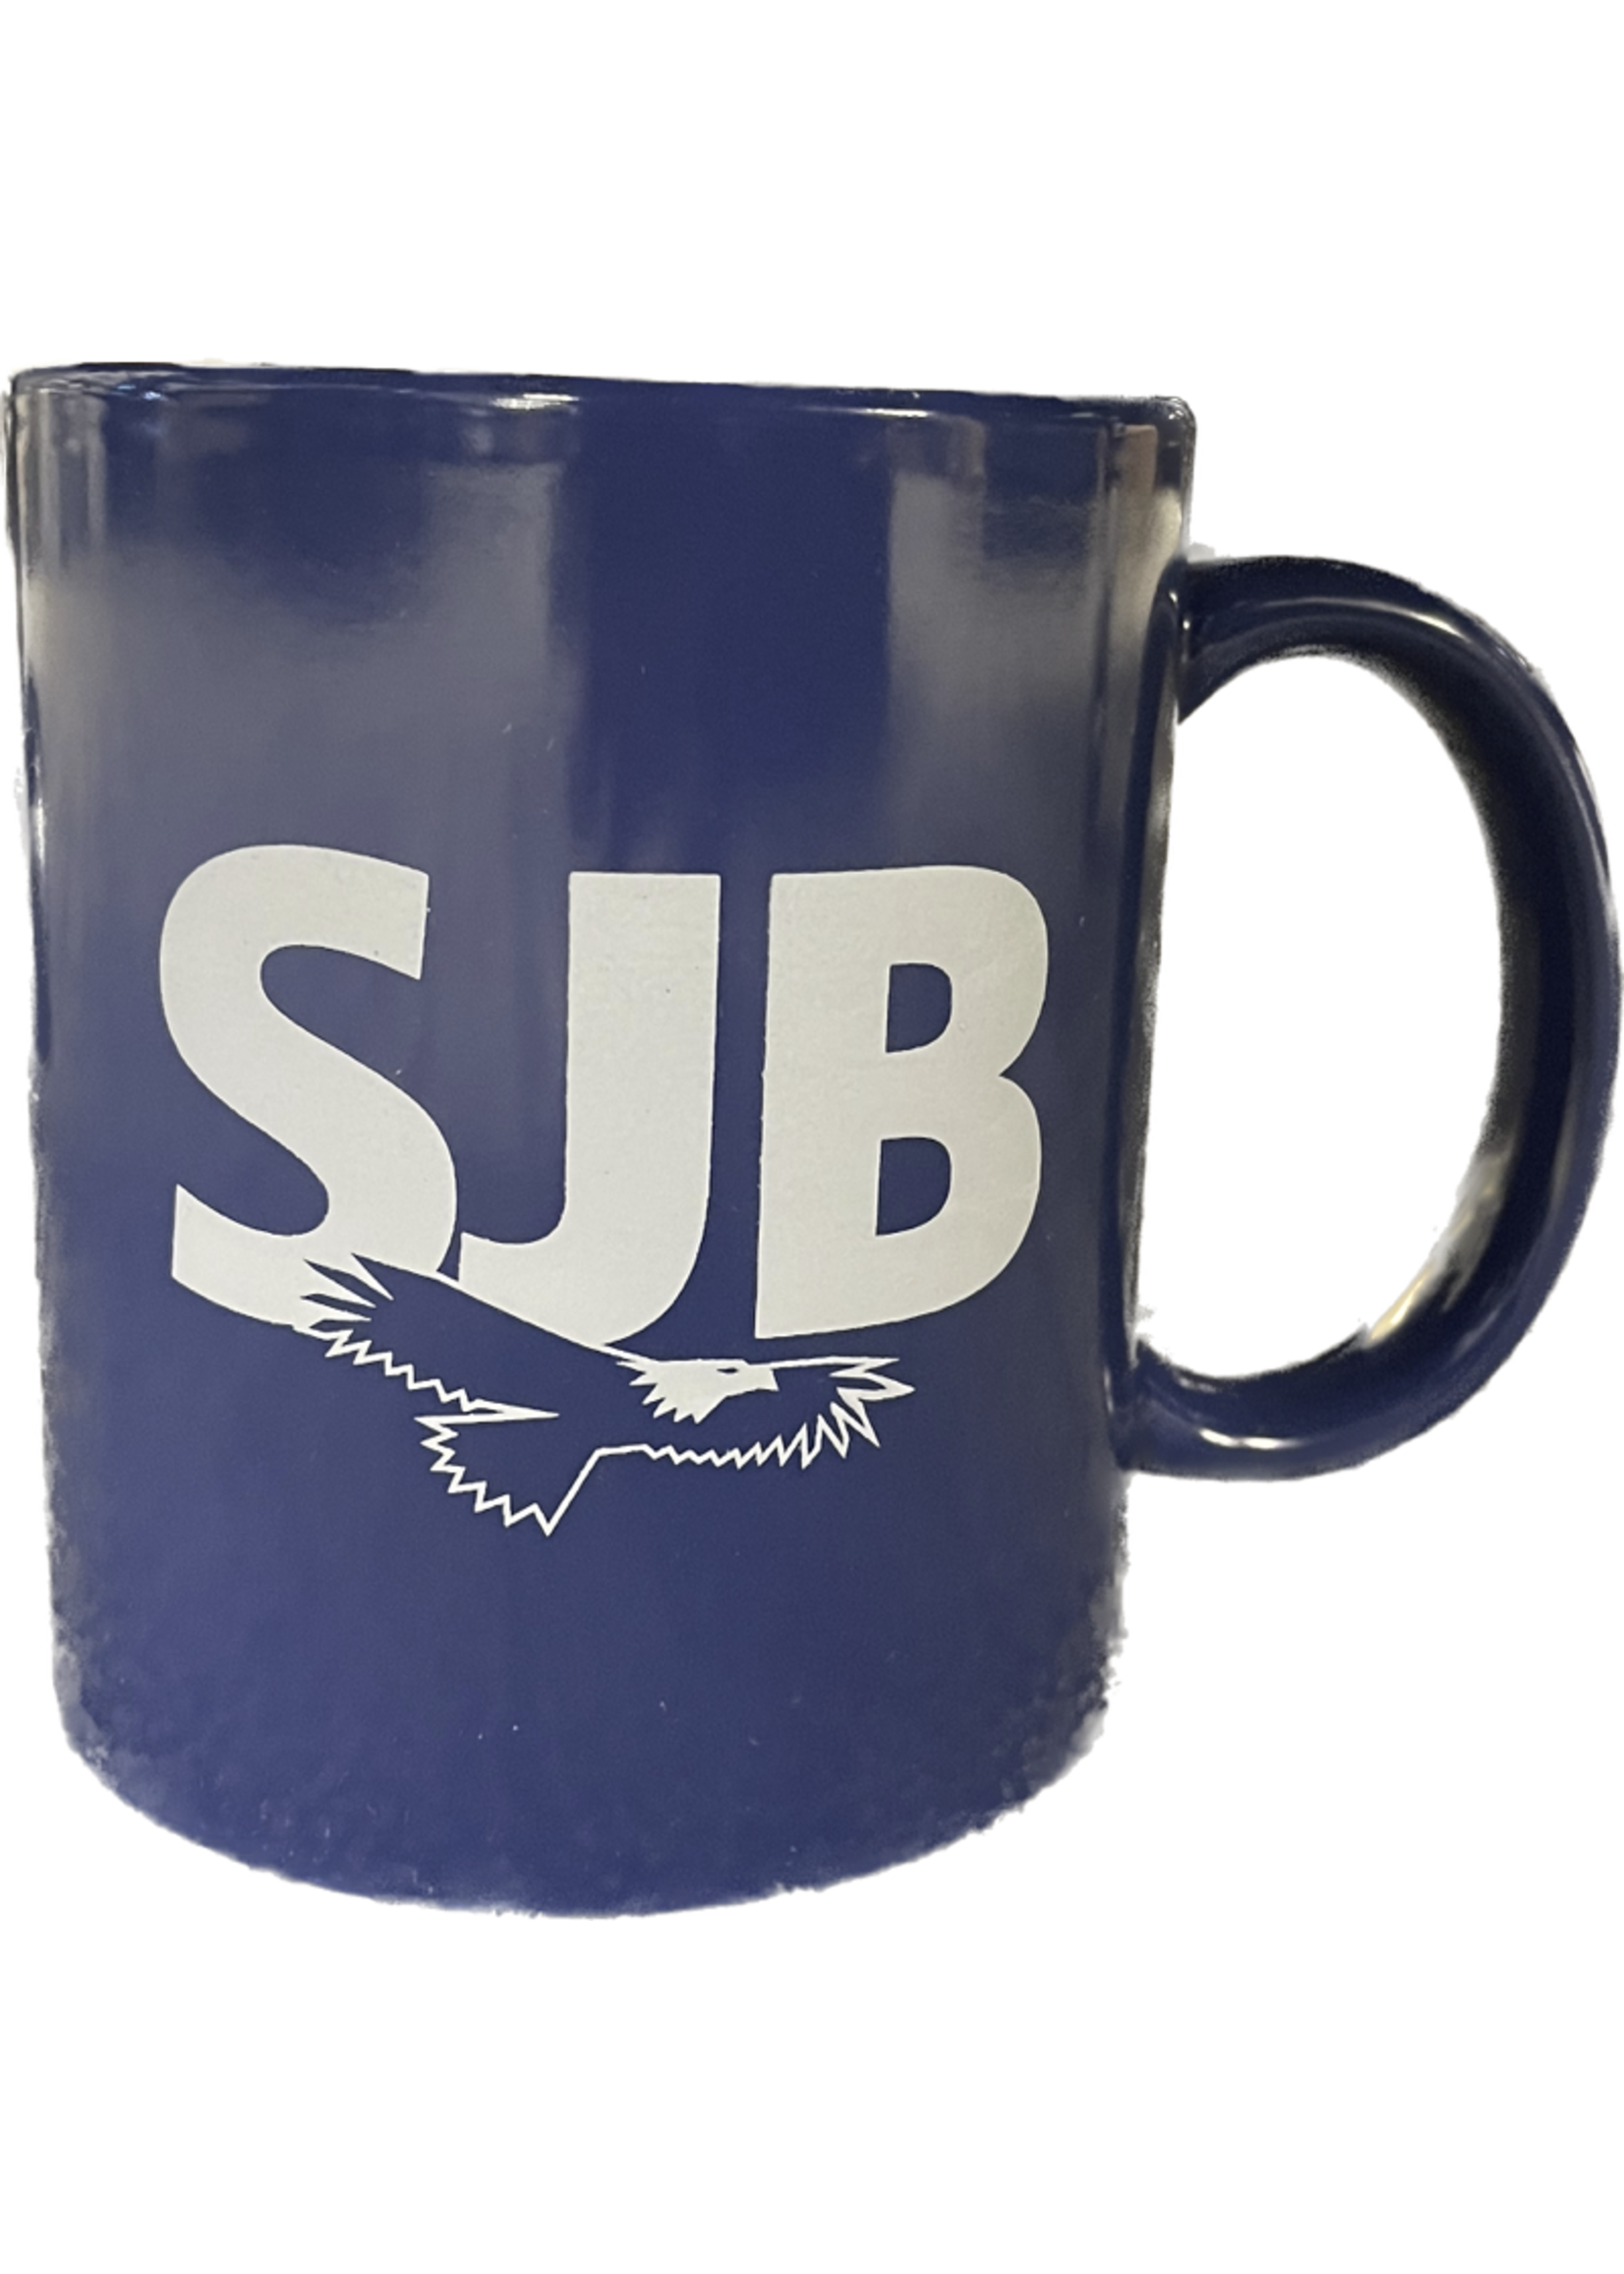 NON-UNIFORM Beverage - SJB Ceramic Mug 11 oz, blue